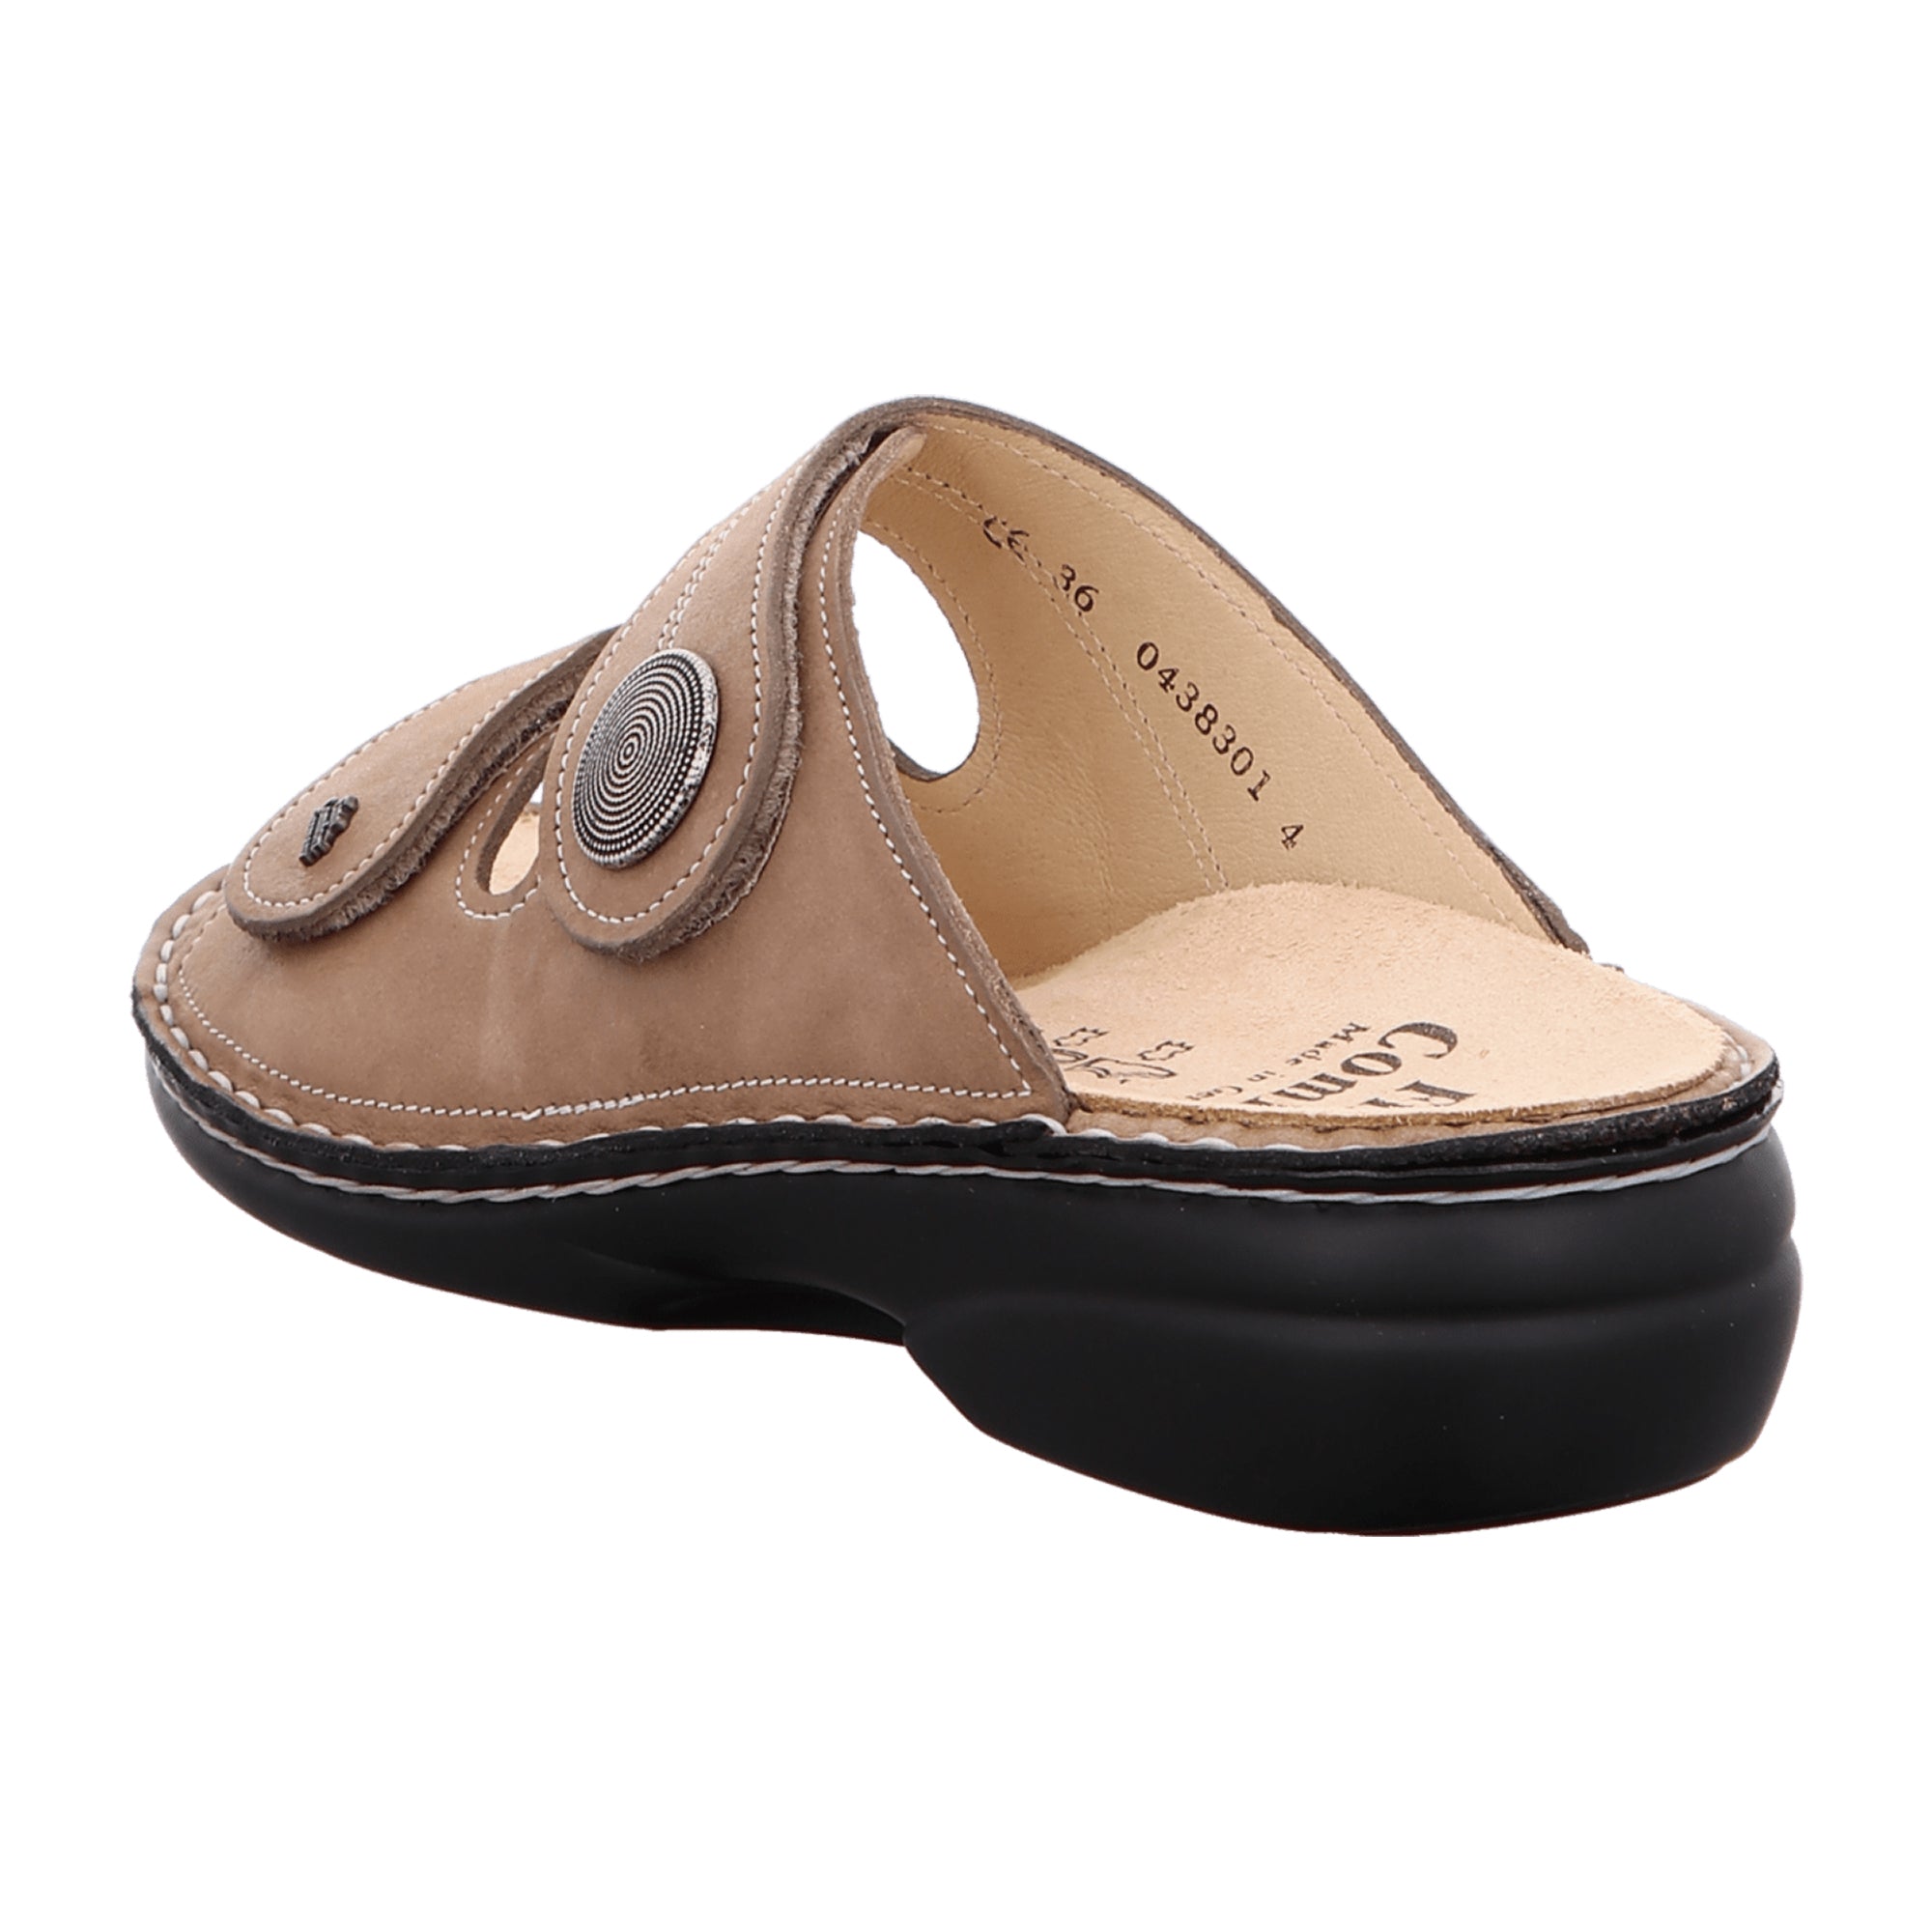 Finn Comfort Women's Comfort Slides, Beige - Stylish & Durable Sandals